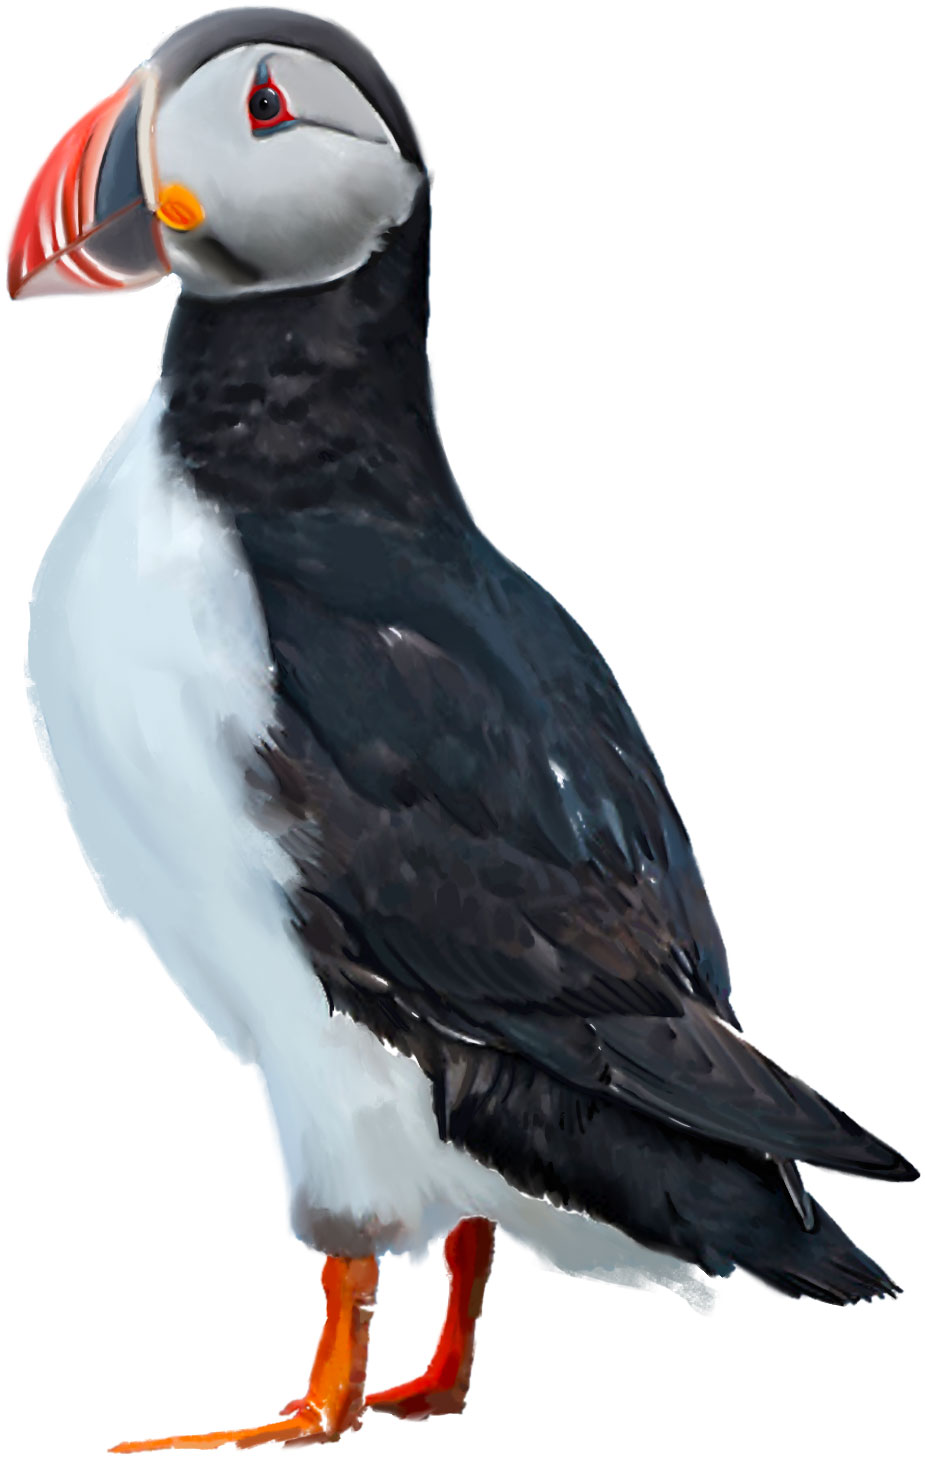 Painting of an Atlantic Puffin bird